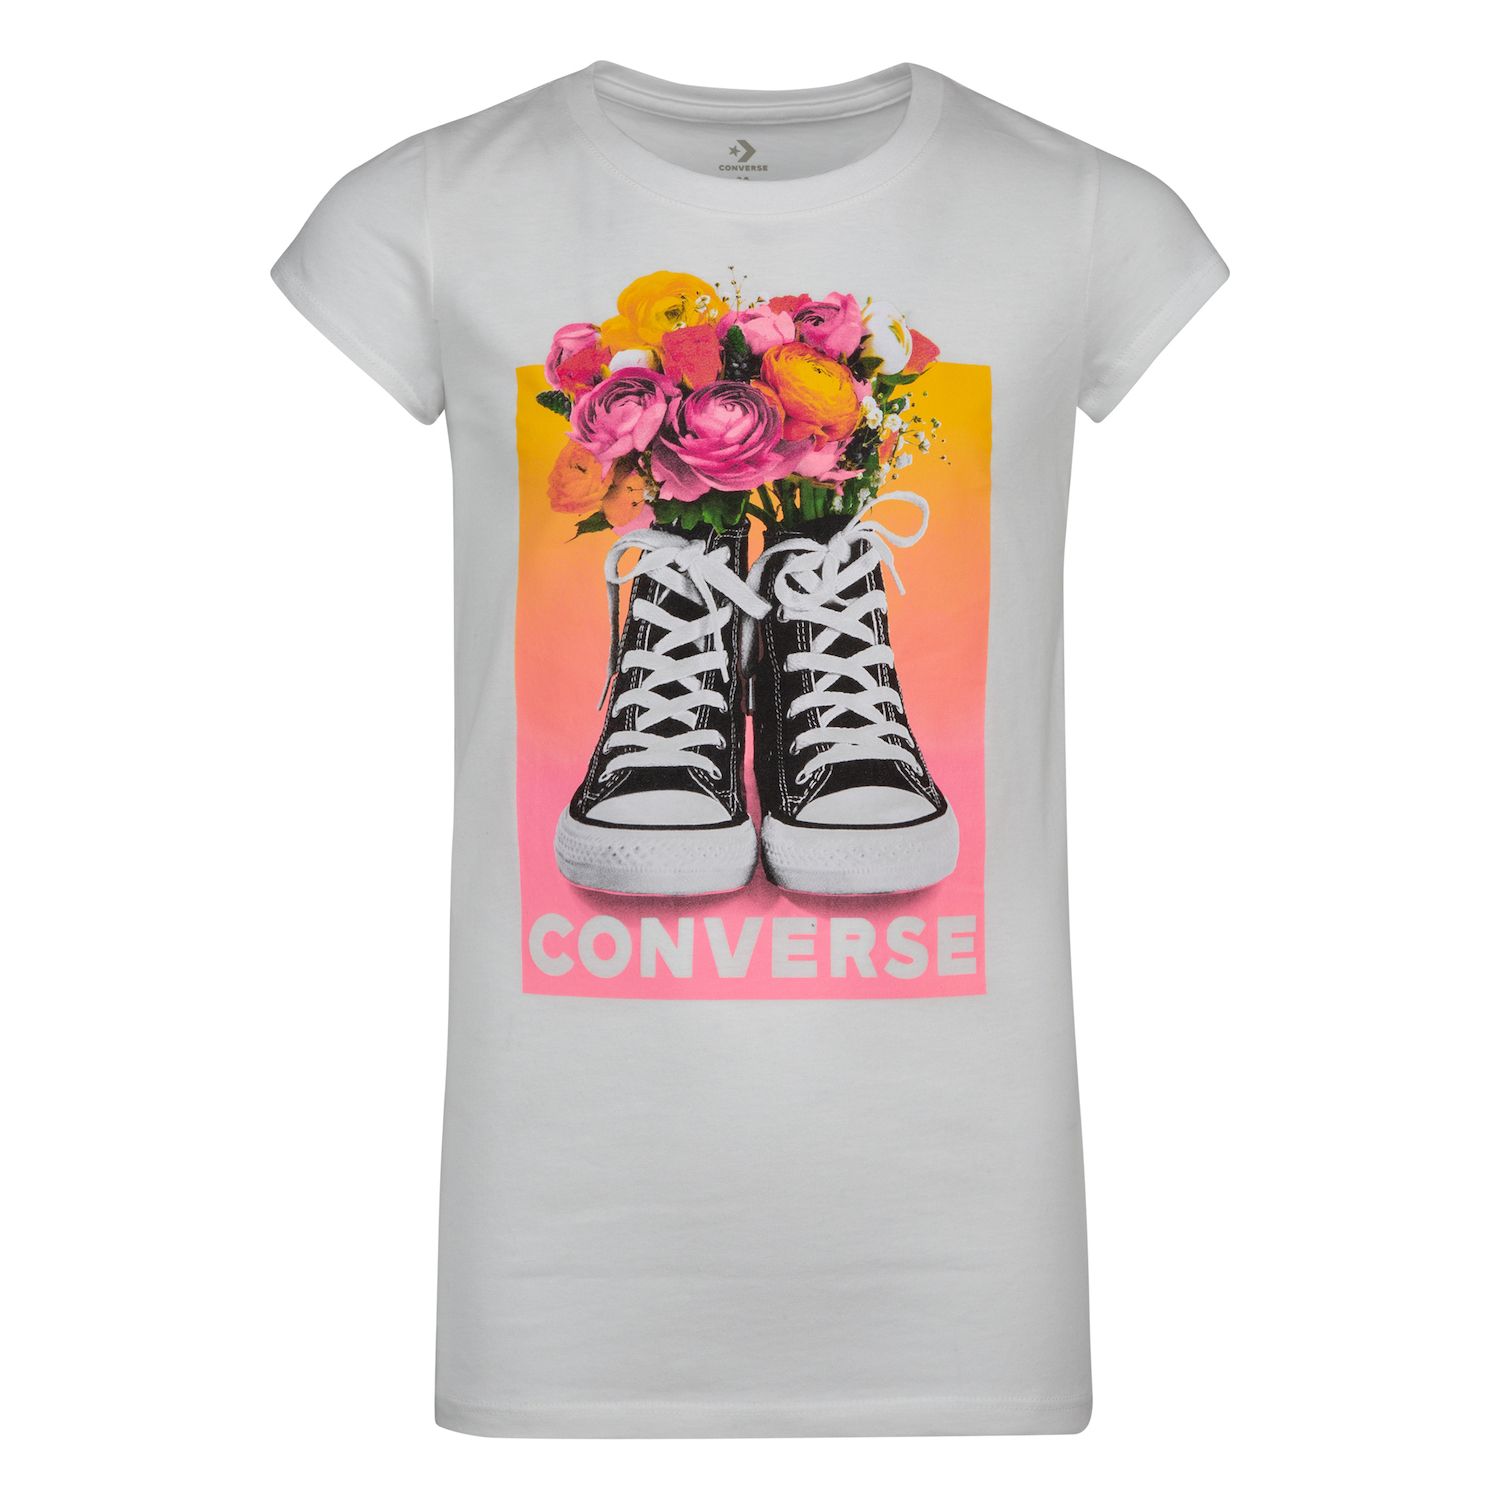 Converse Clothing | Kohl's